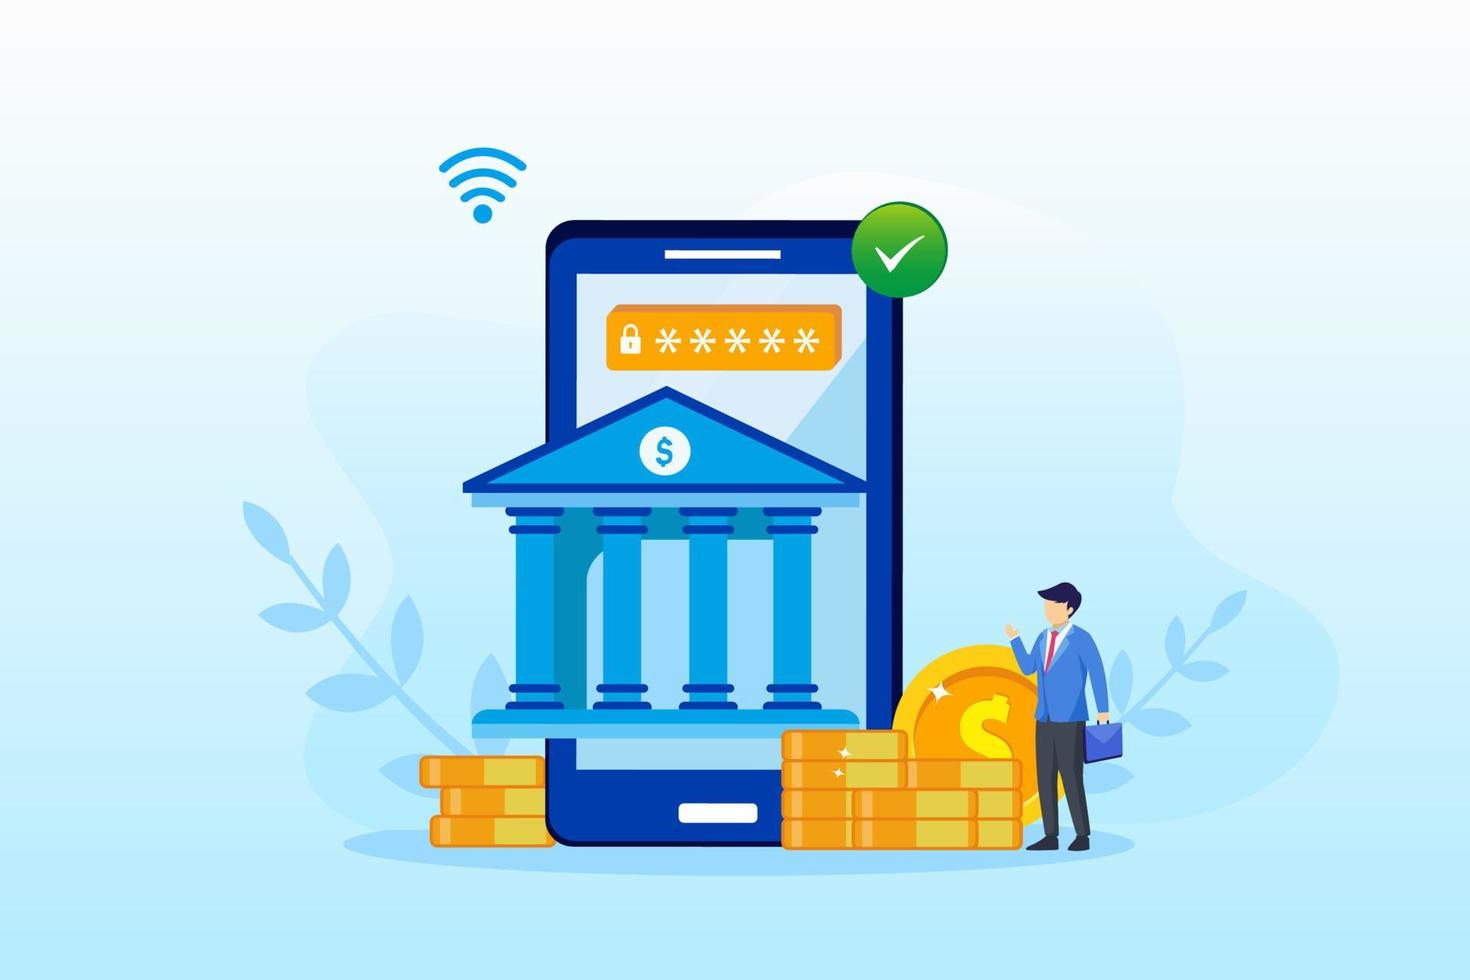 Mobile banking concept illustration vector. vector